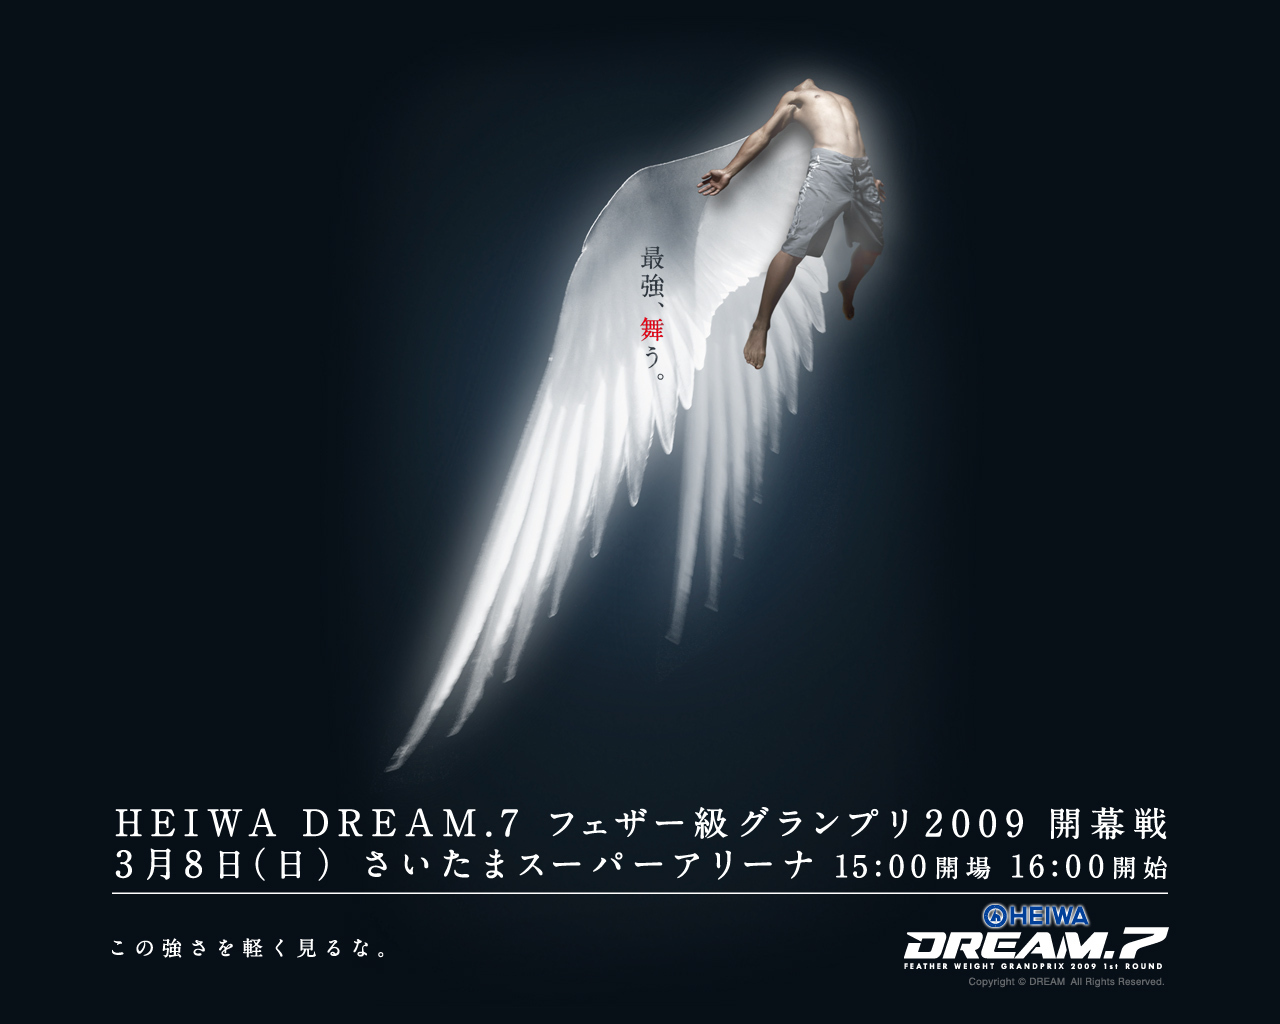 Dream-7-mma-4262317-1280-1024.jpg